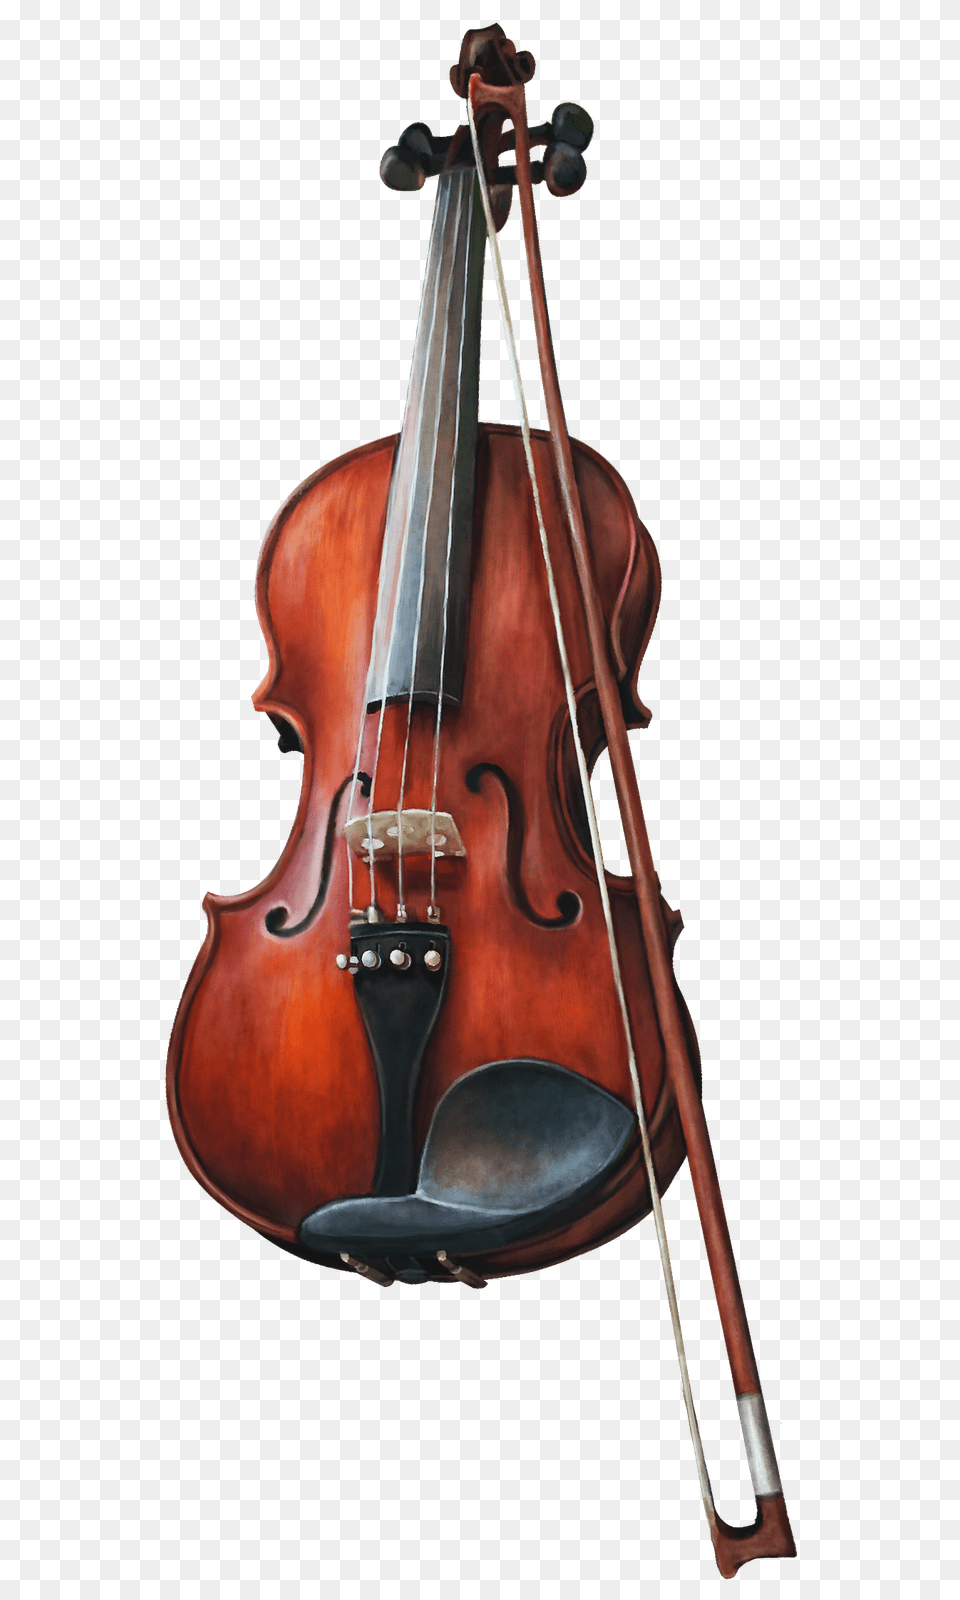 Violin, Musical Instrument Free Png Download